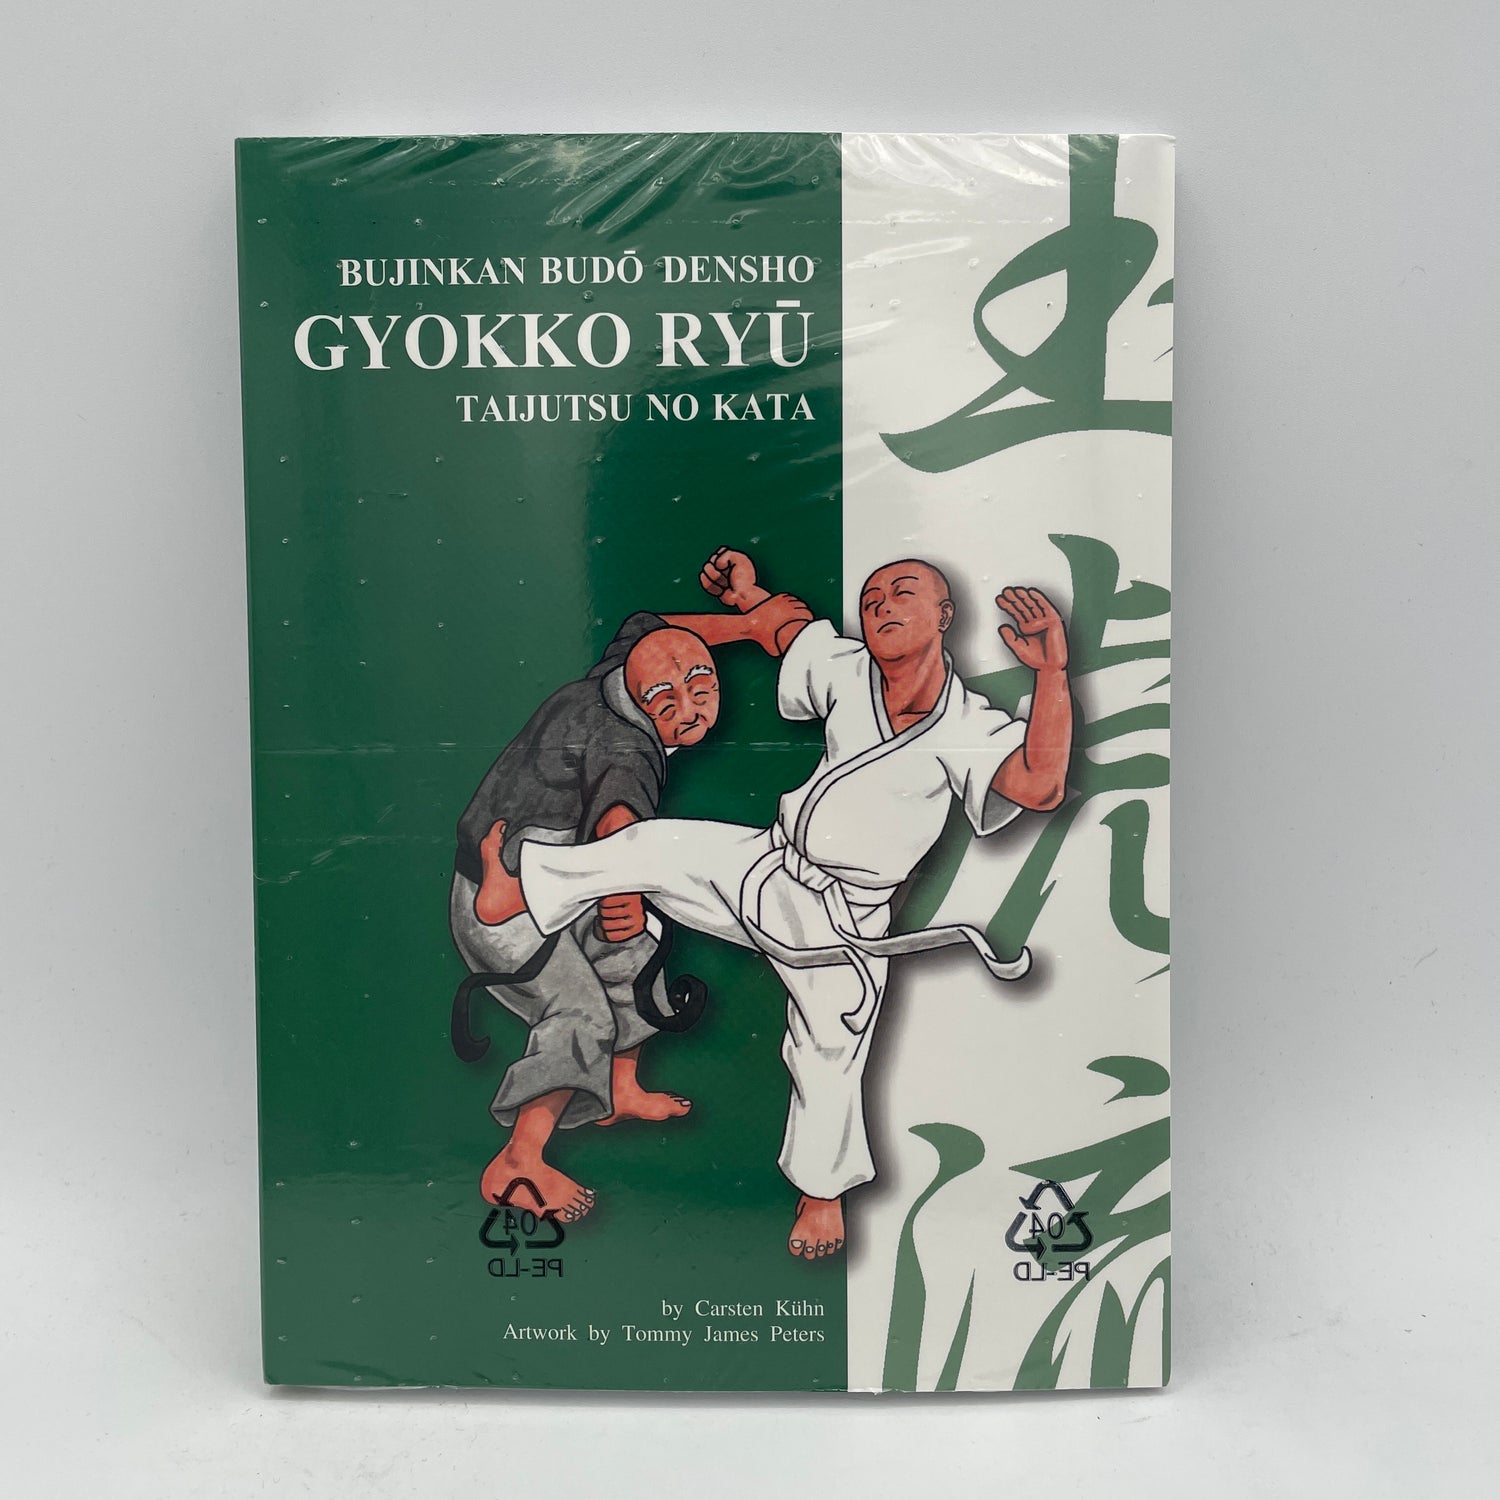 Bujinkan Budo Densho Book 1 Gyokko Ryu by Carsten Kuhn